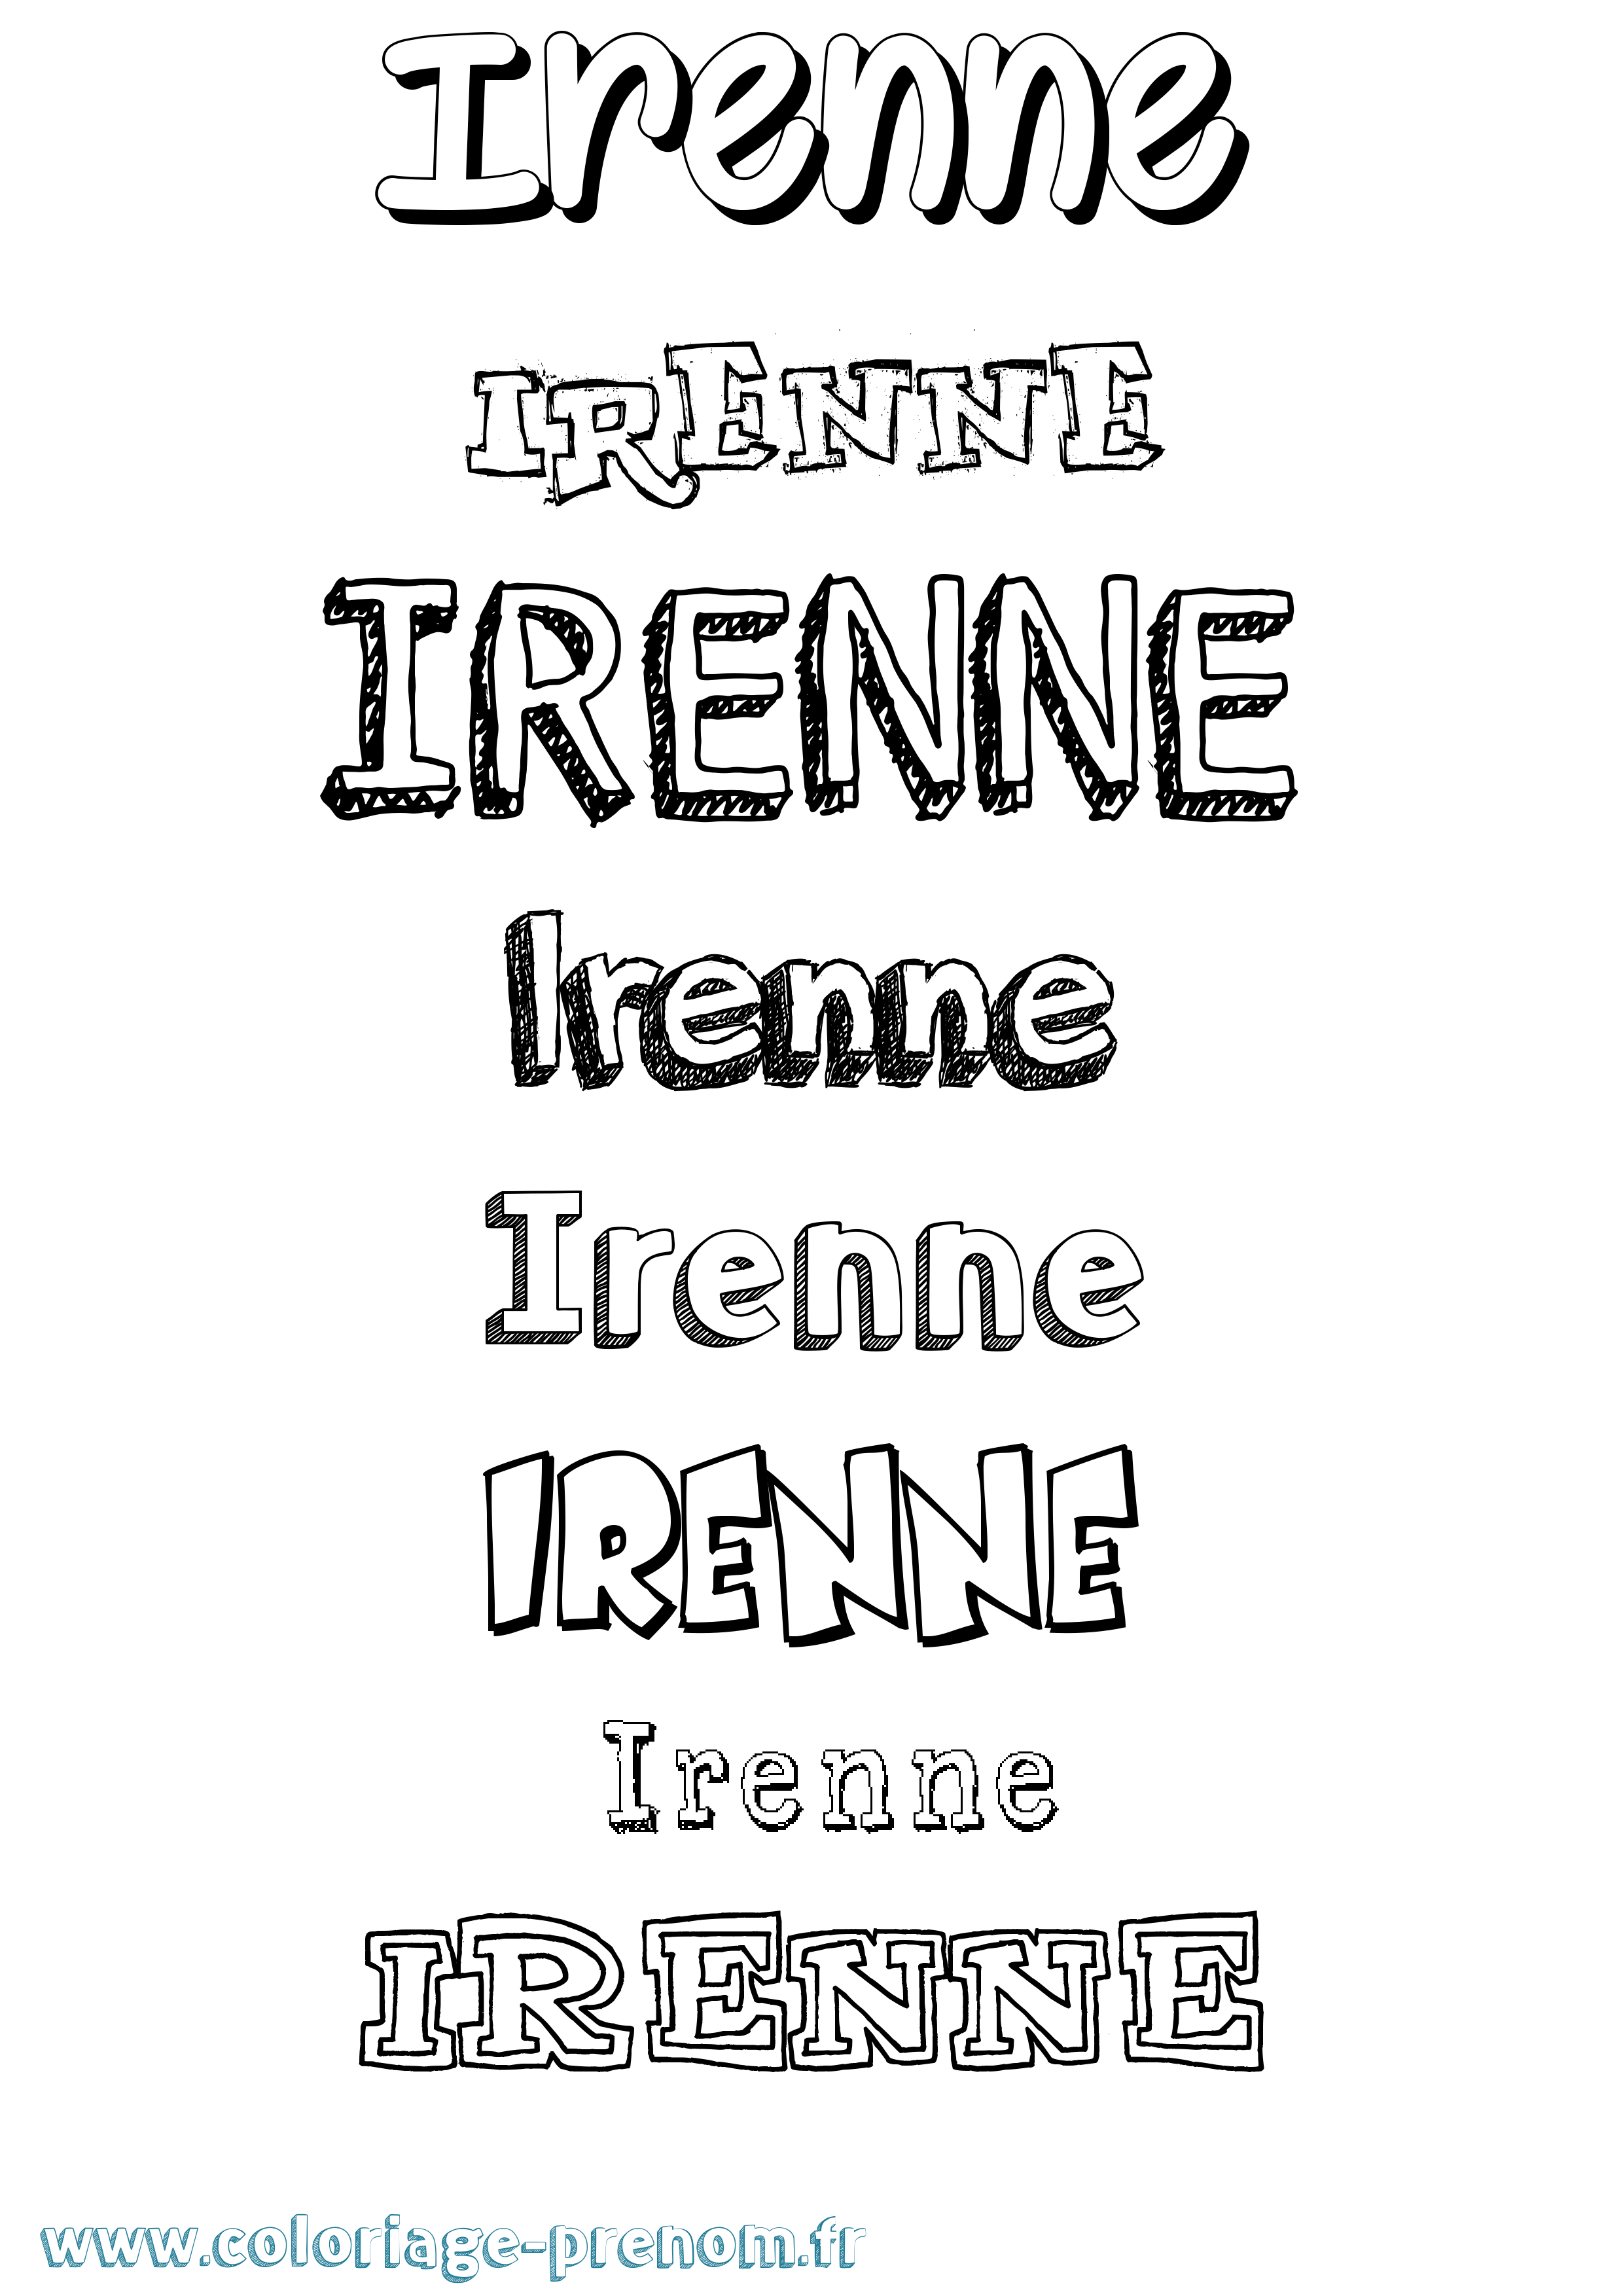 Coloriage prénom Irenne Dessiné